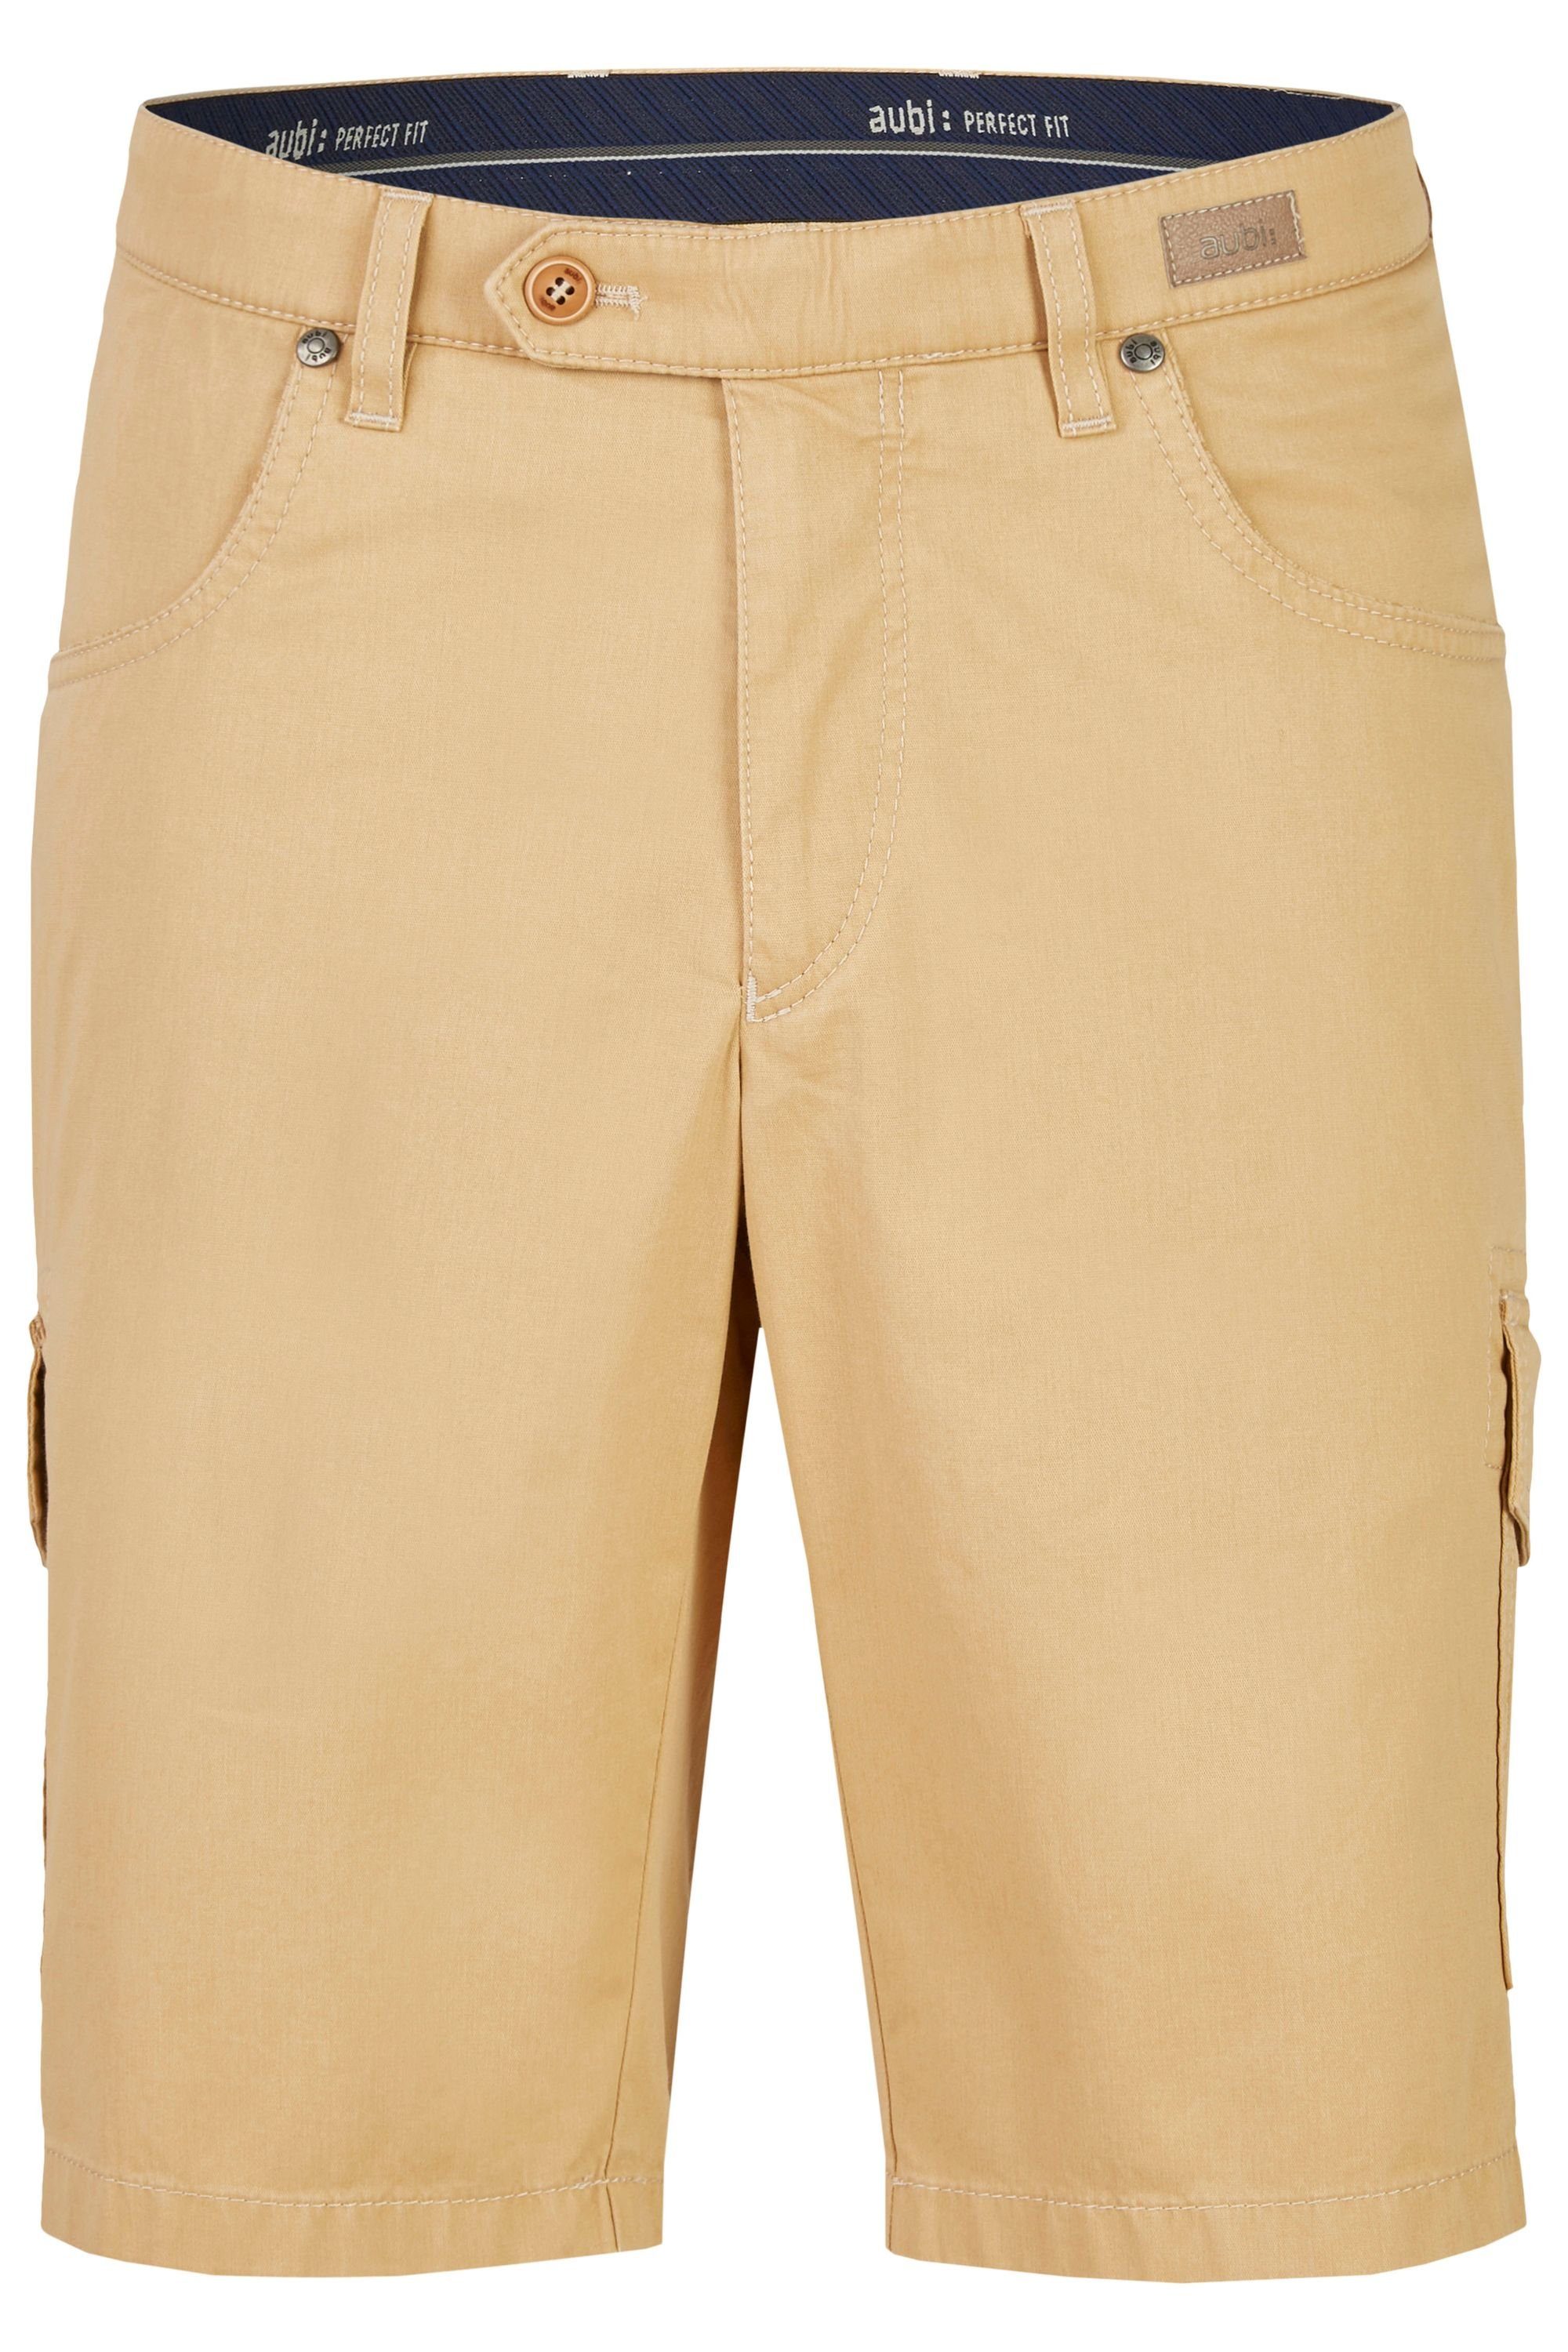 Paisley Flex Herren 616 Modell High Fit Perfect aubi aubi: gelb (62) Stoffhose Shorts